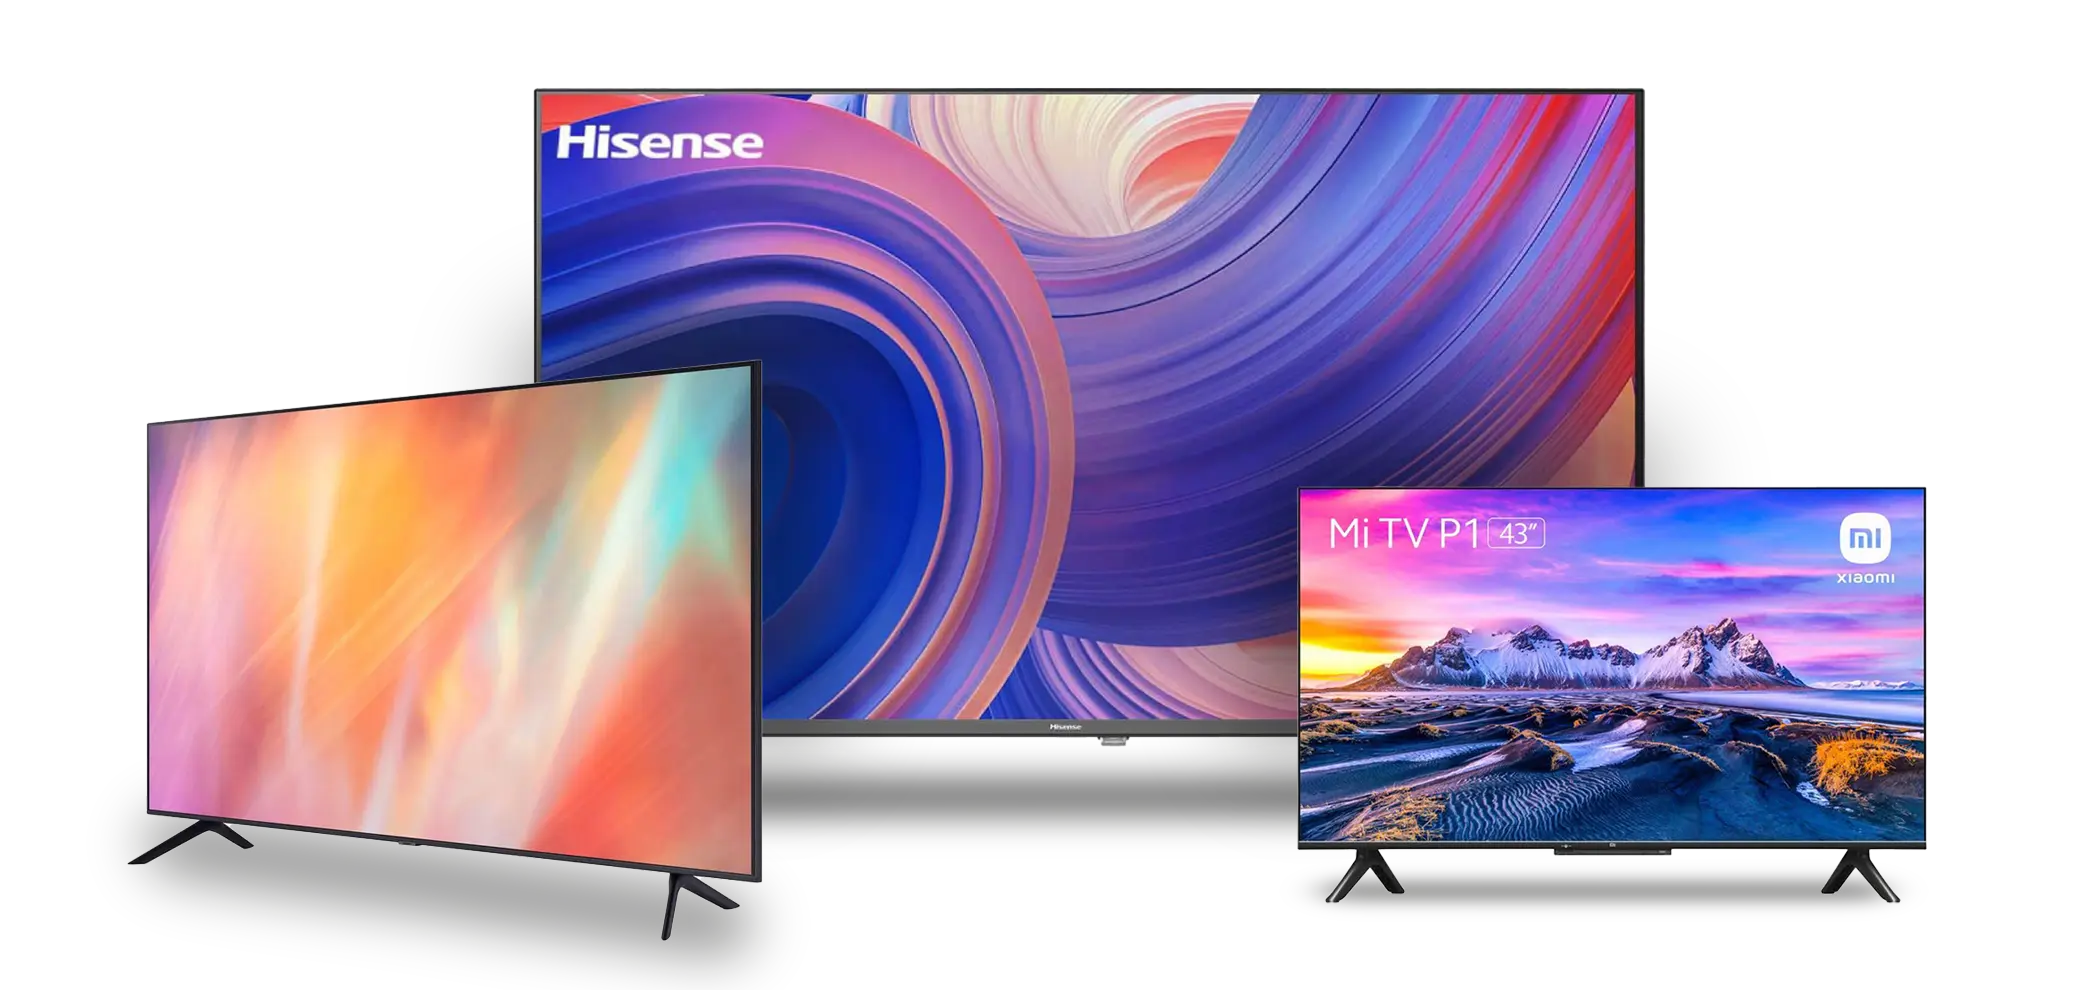 Pantalla Smart TV 40 pulgadas HISENSE IPS LED Full HD WiFi Roku TV HDMI  40H4030F3